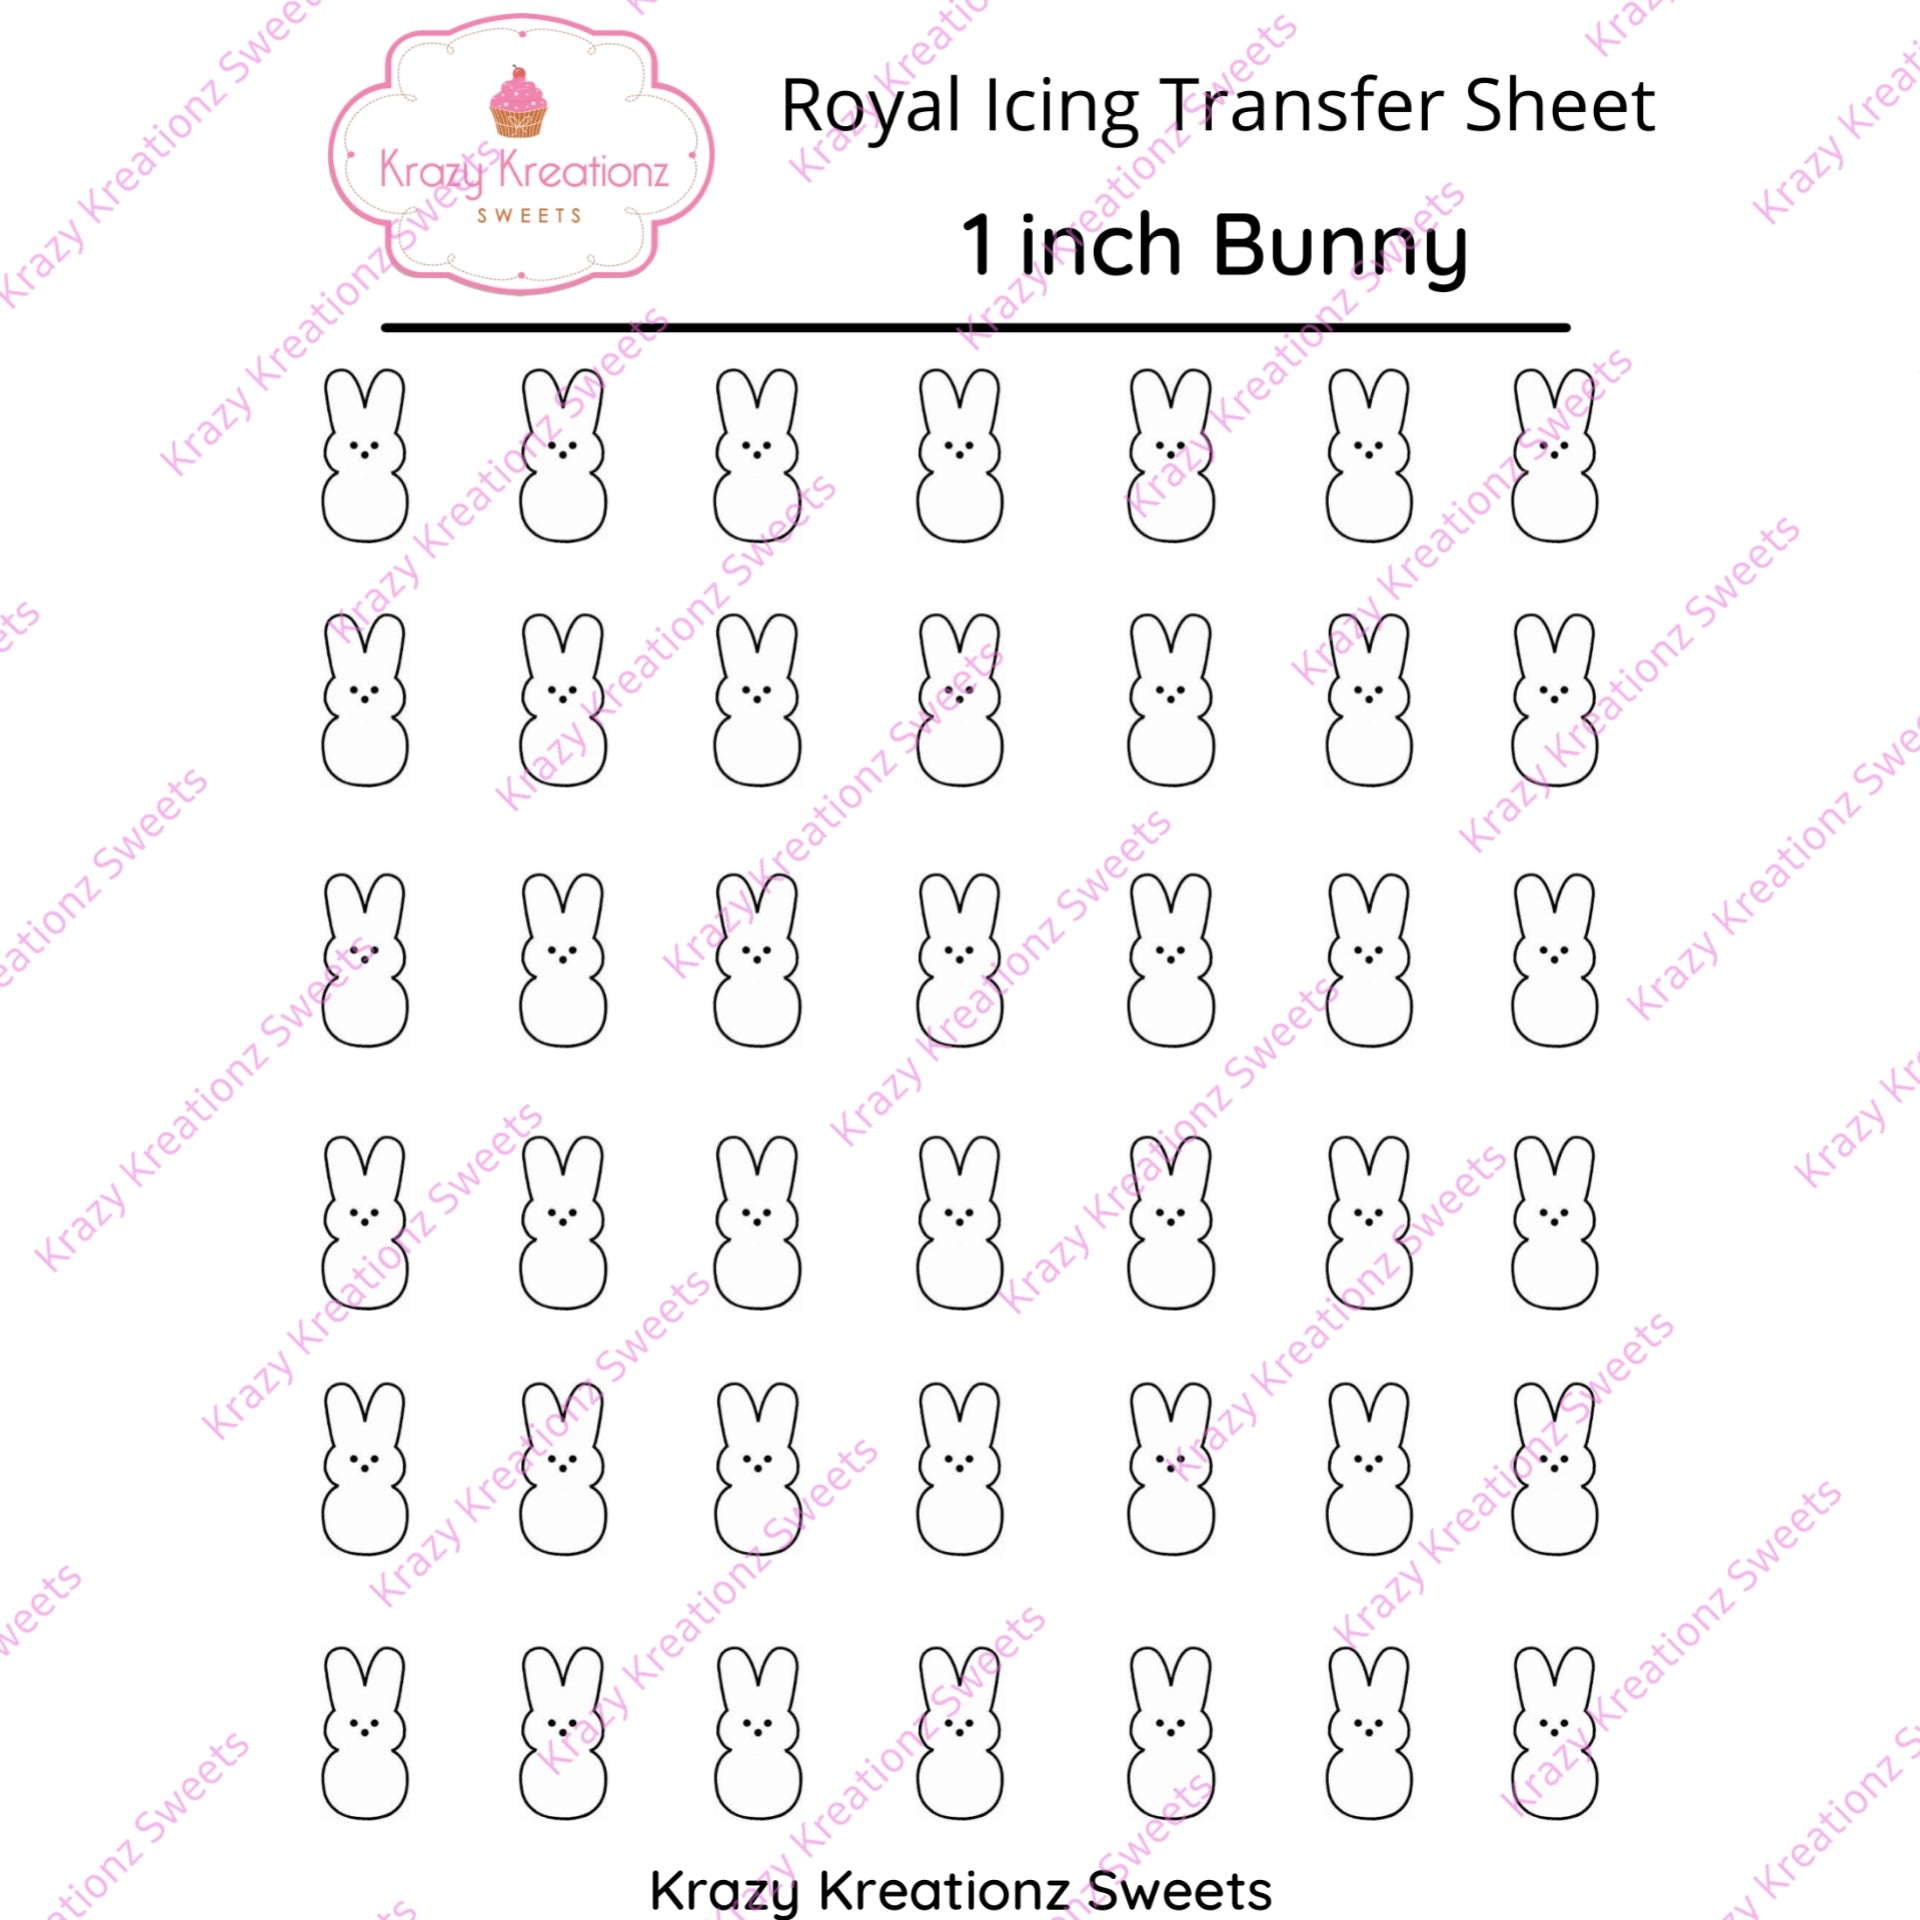 1 inch Bunny Transfer Sheet